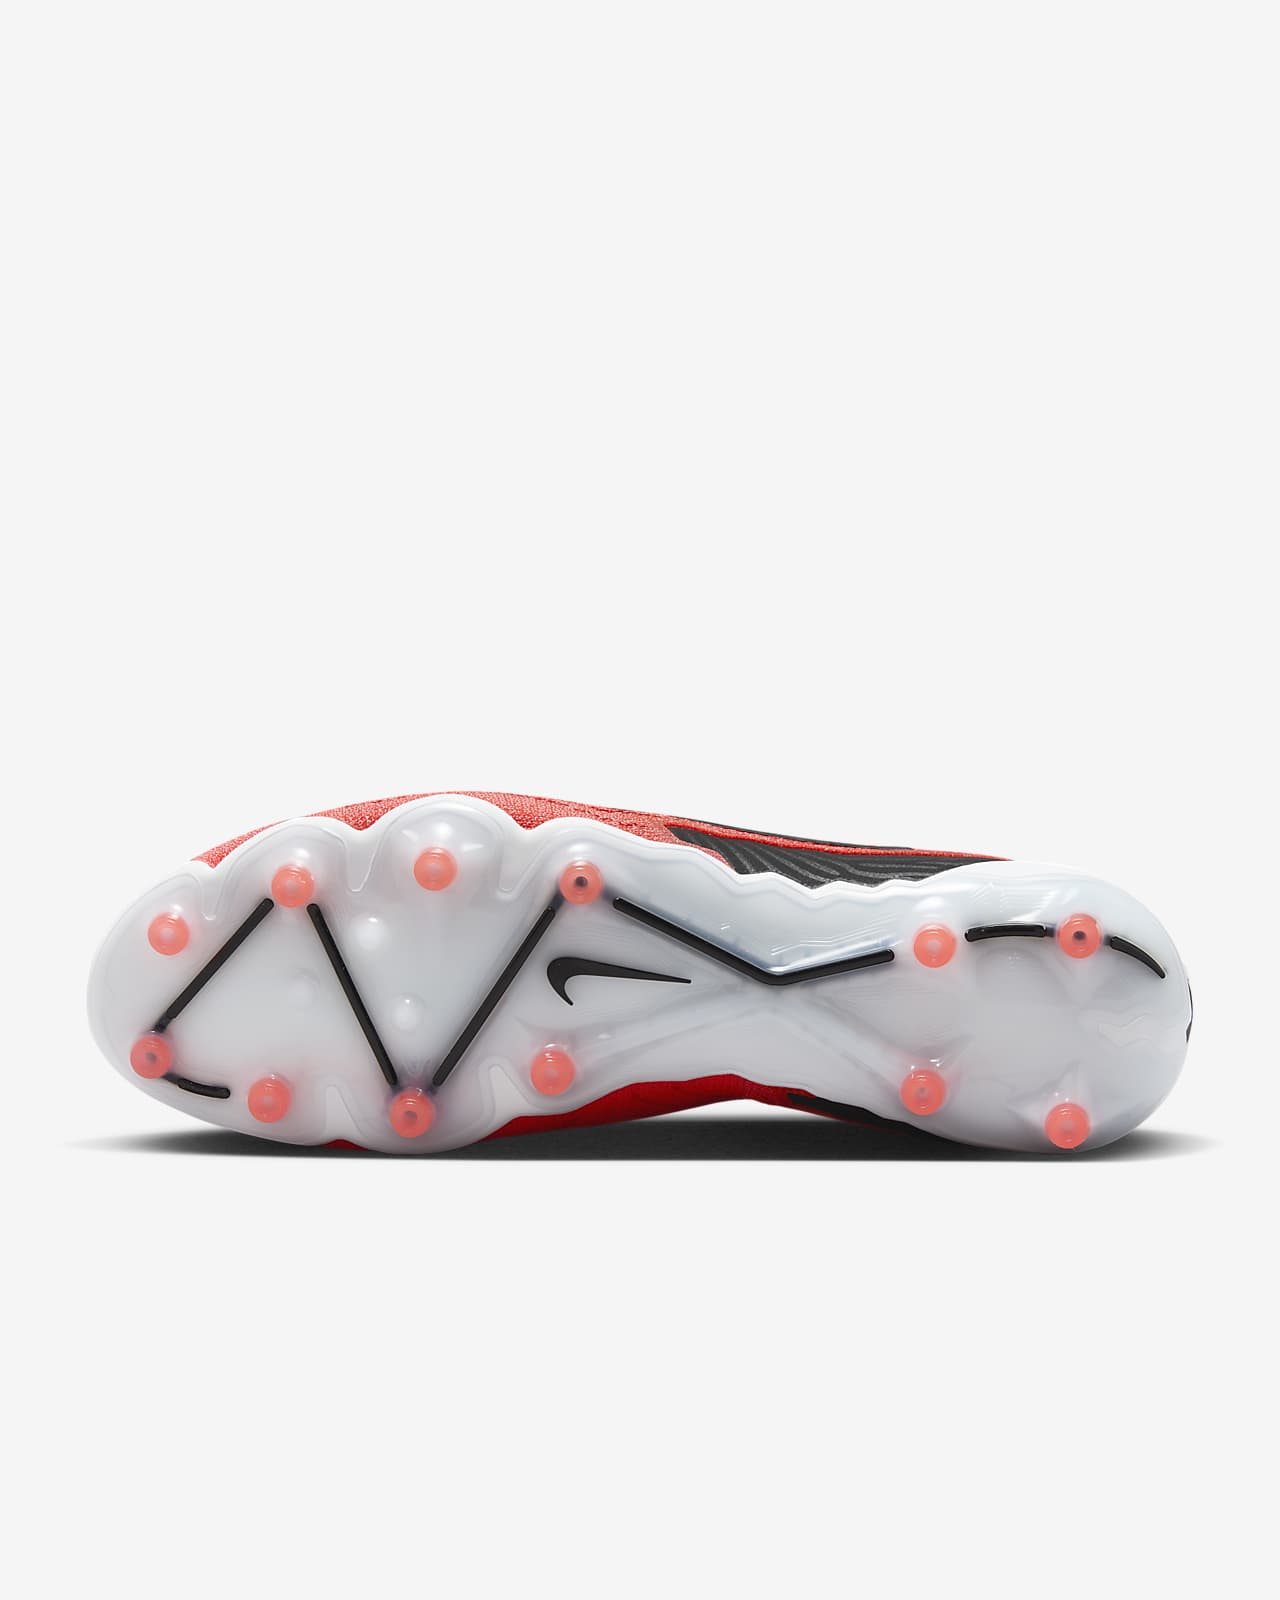 Chaussure de foot basse à crampons pour terrain gras Nike Phantom